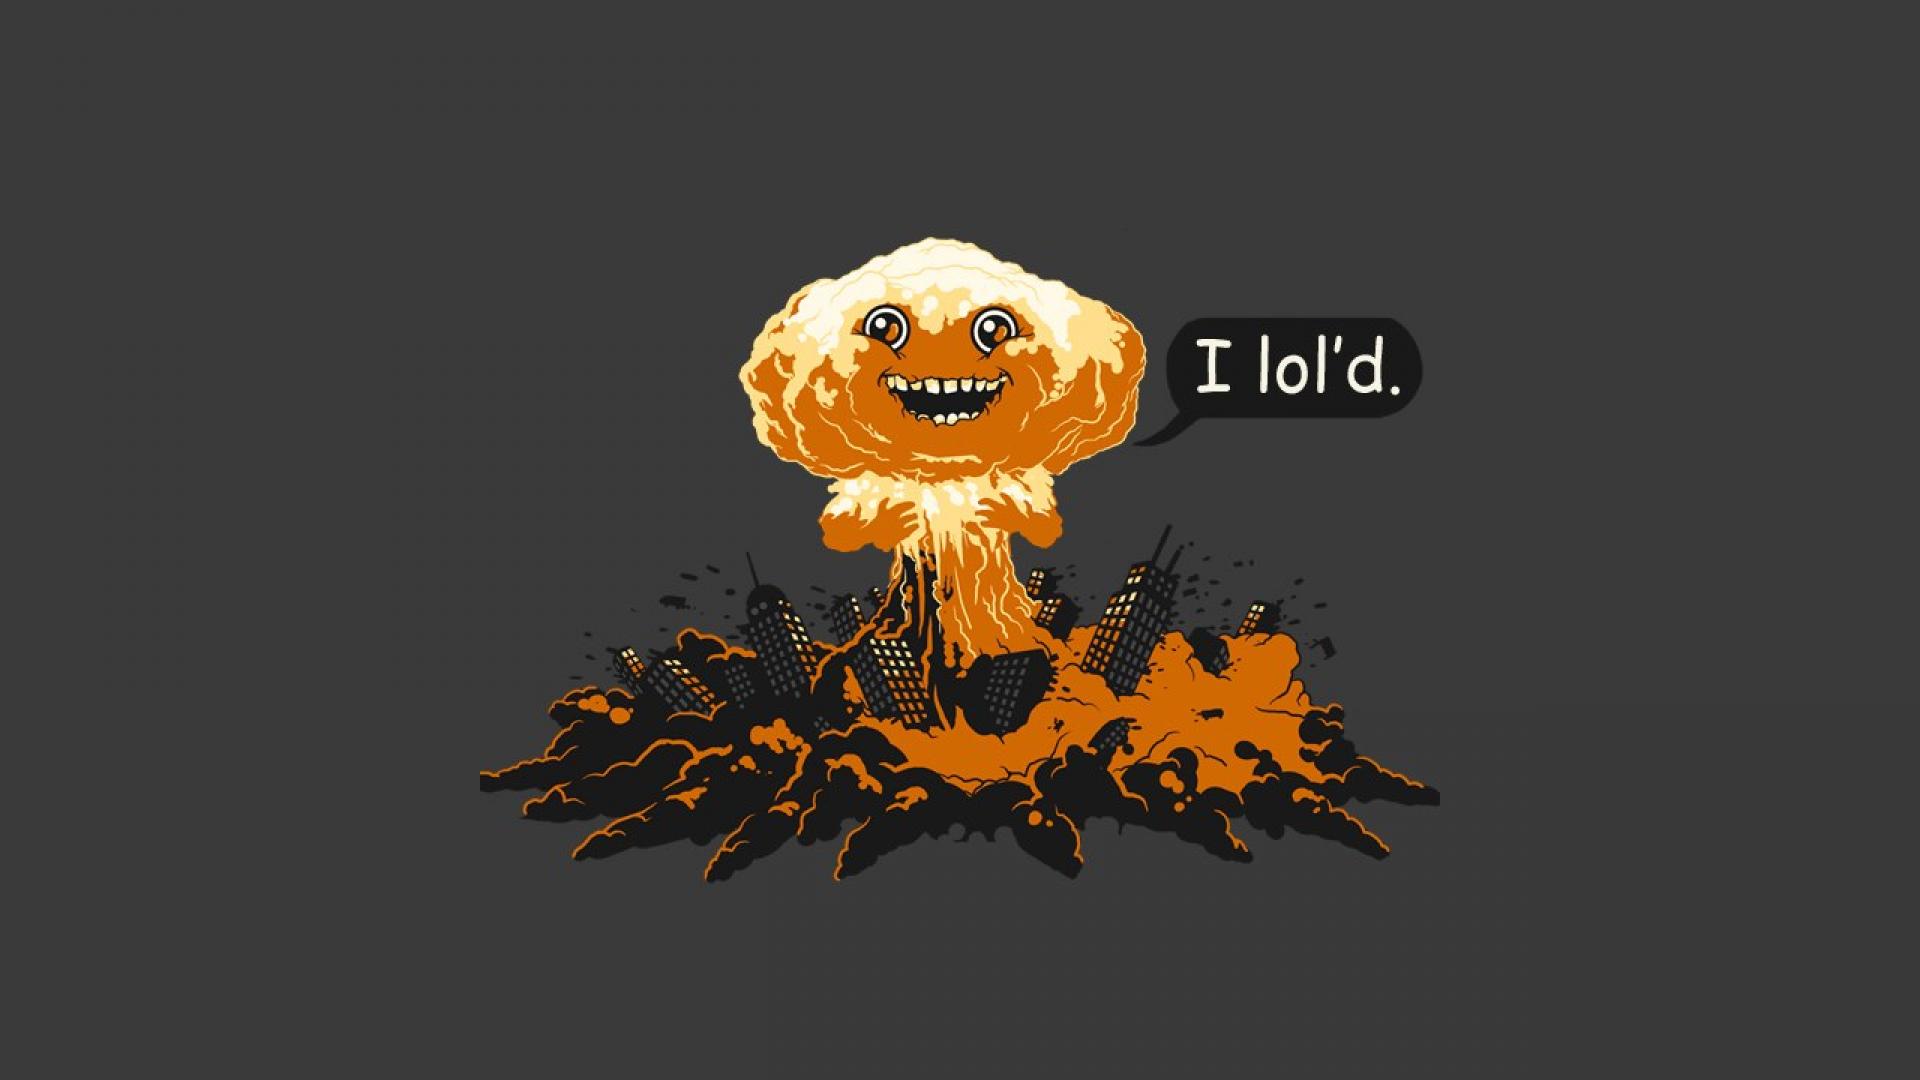 Explosion Nuclear Explosions Mushroom Cloud Funny Humor HD Wallpaper